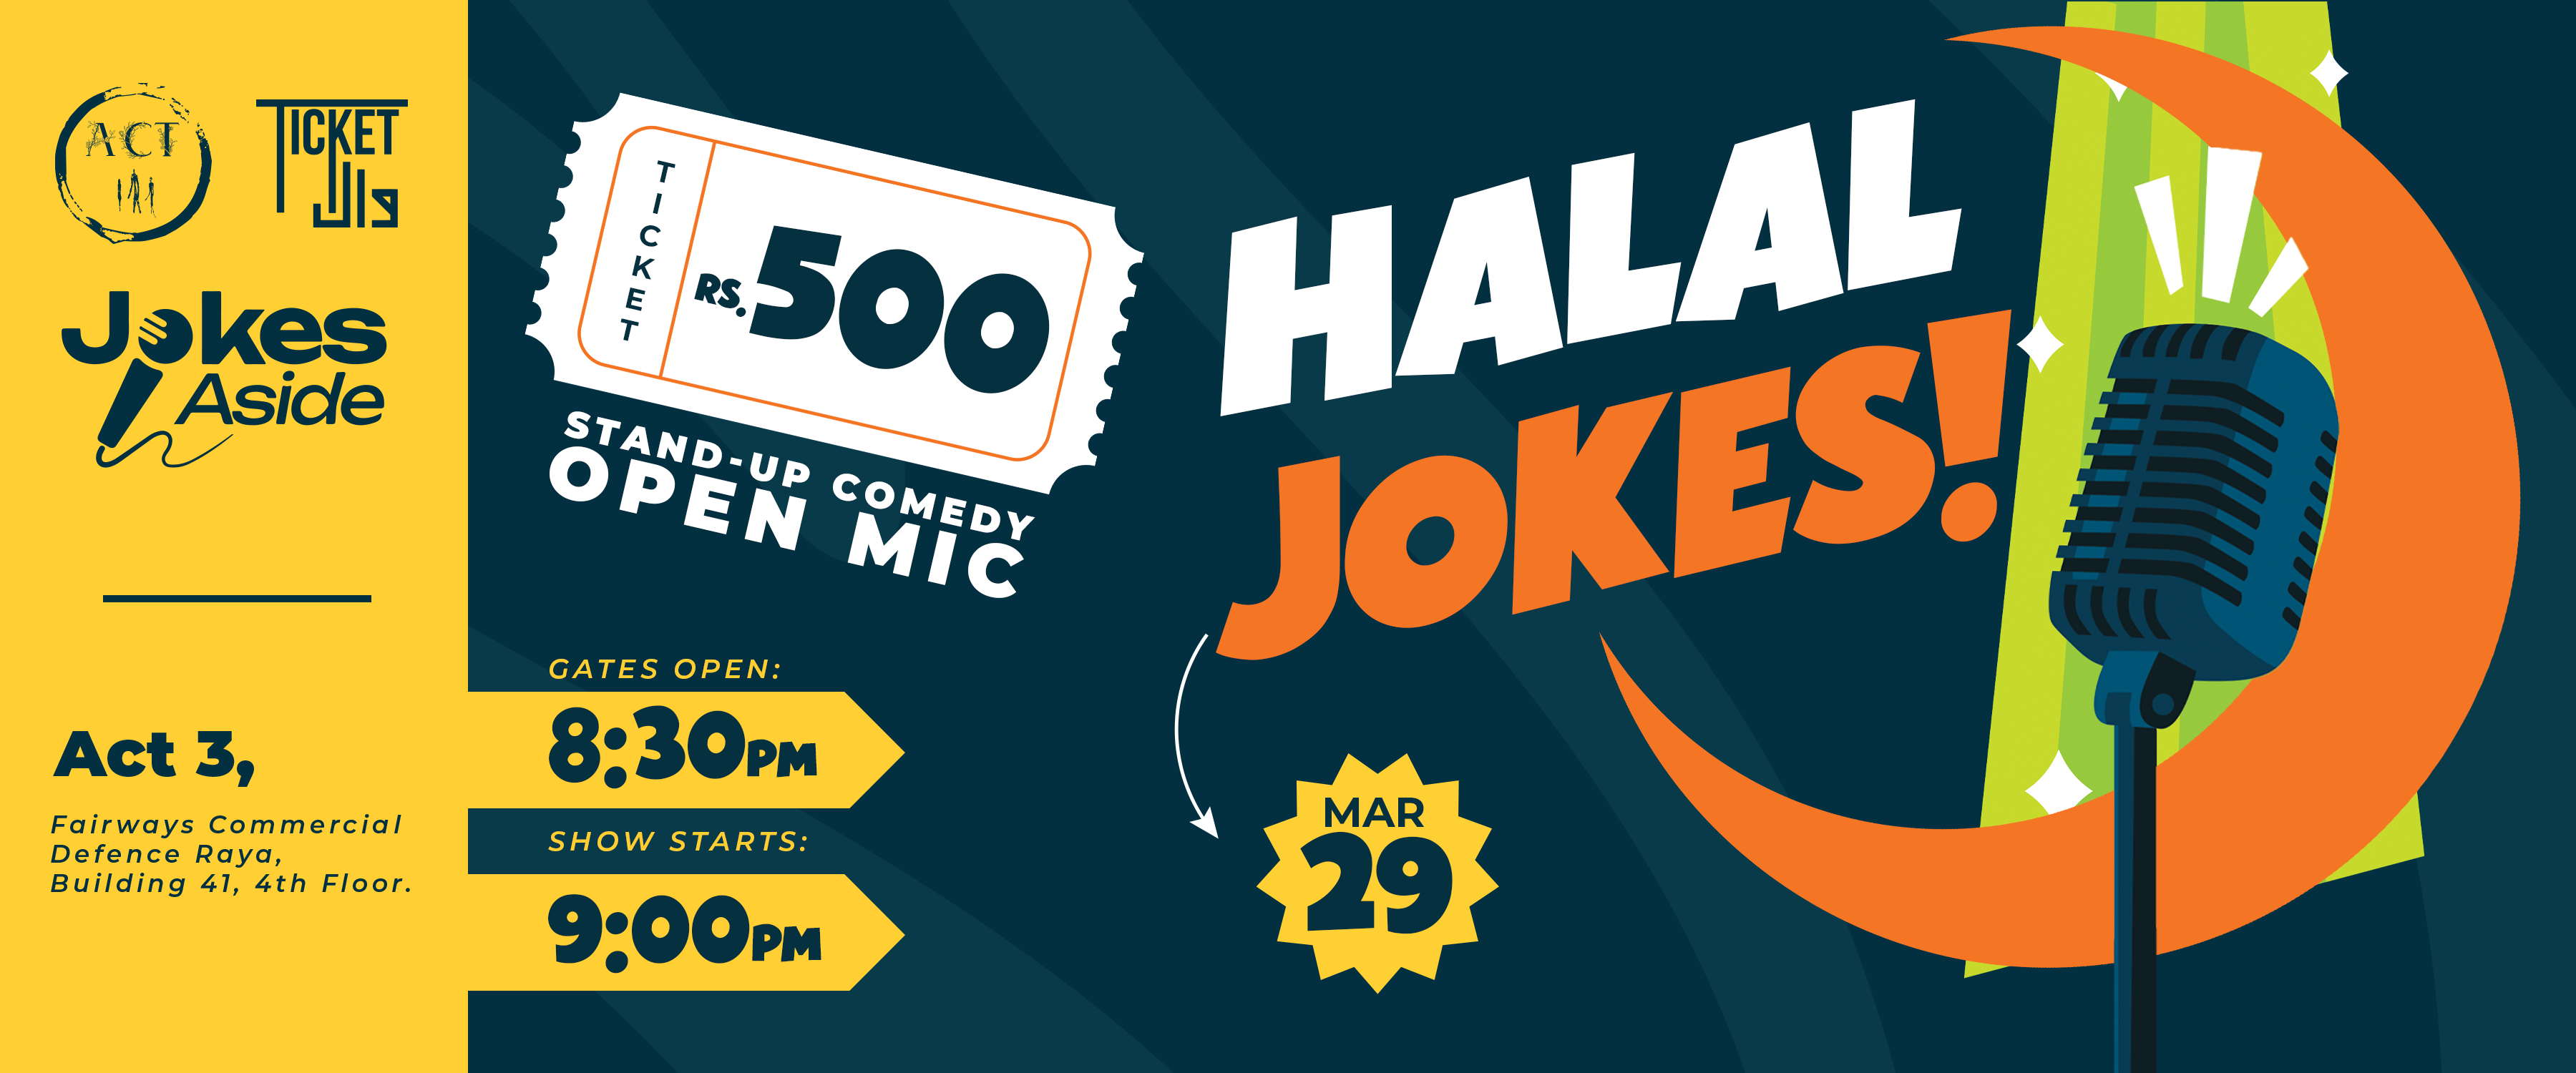 Halal Jokes